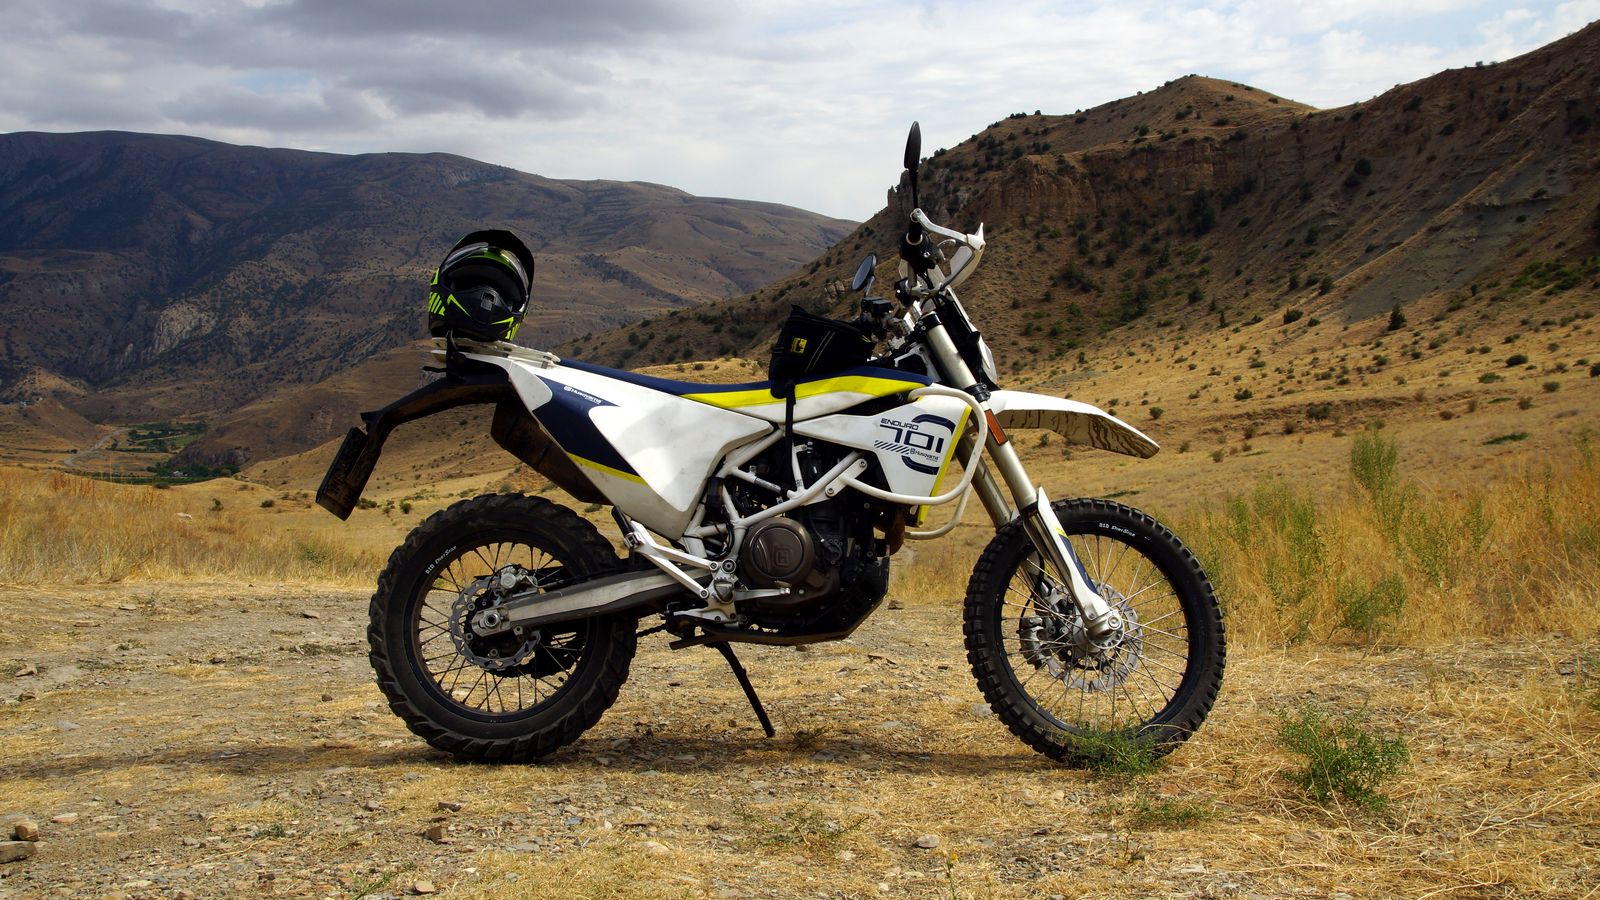 1600x900 Wallpaper motorcycle, bike, mountains, nature